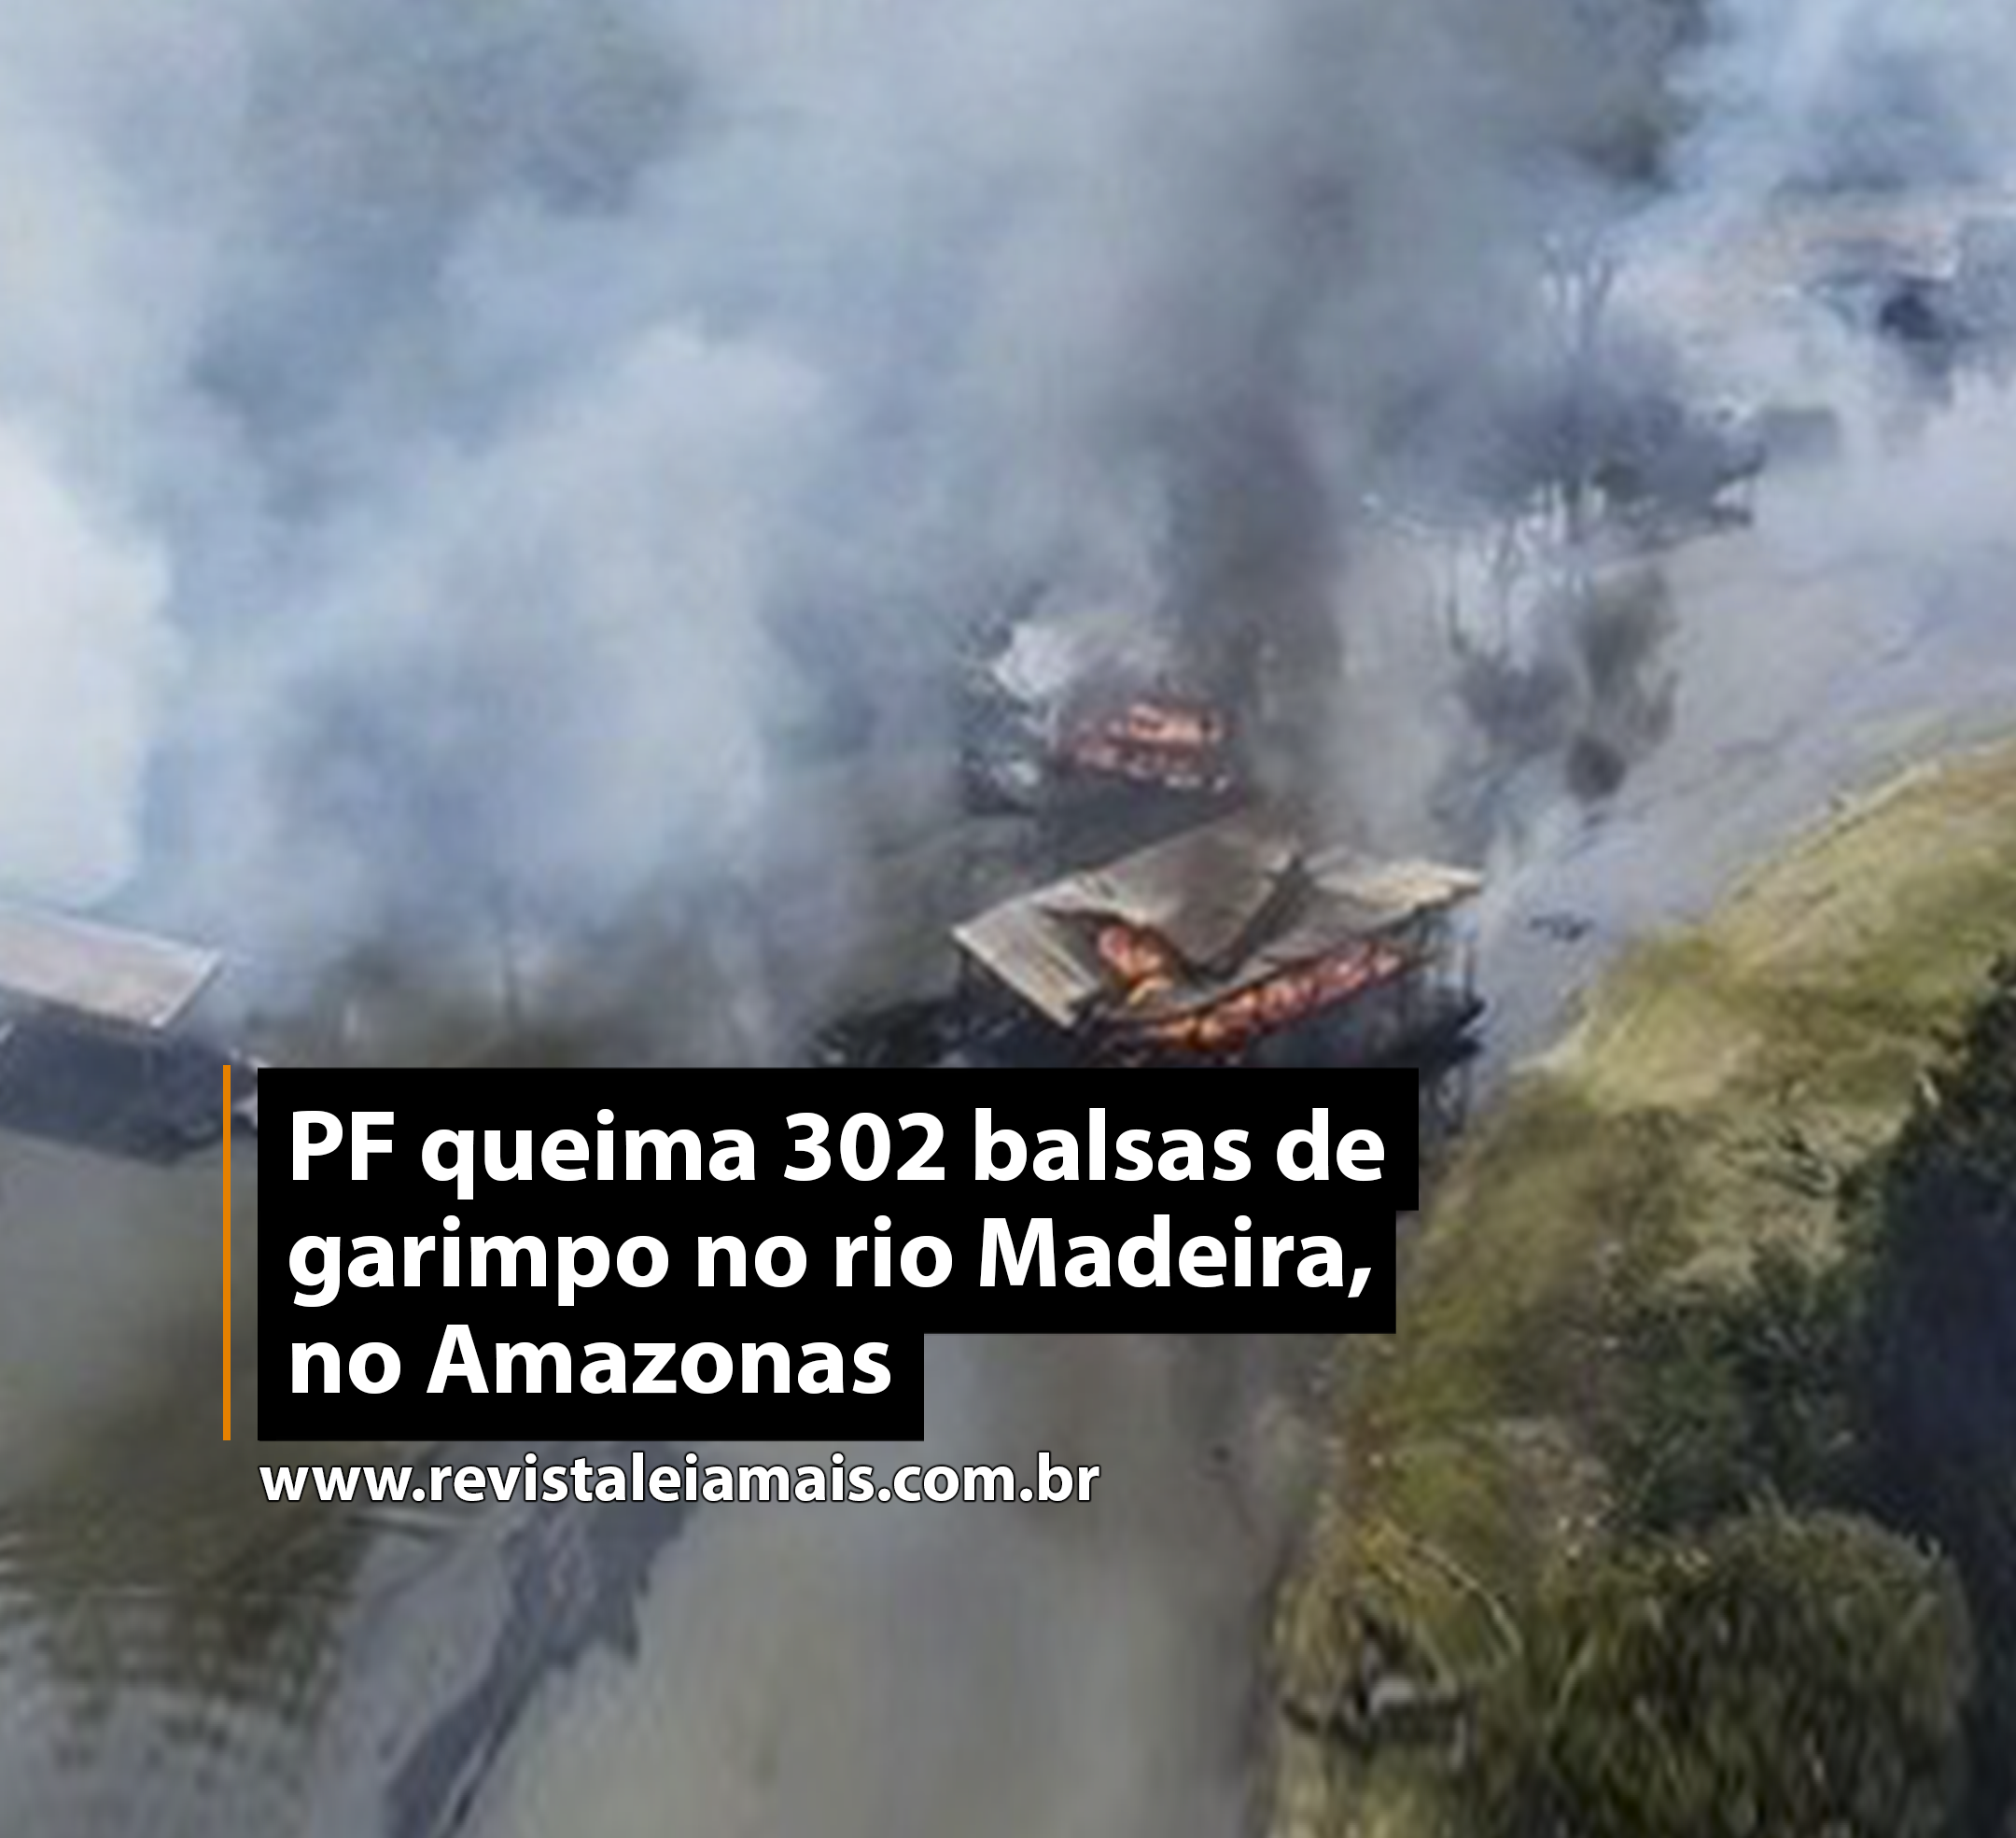 PF queima 302 balsas de garimpo no rio Madeira, no Amazonas